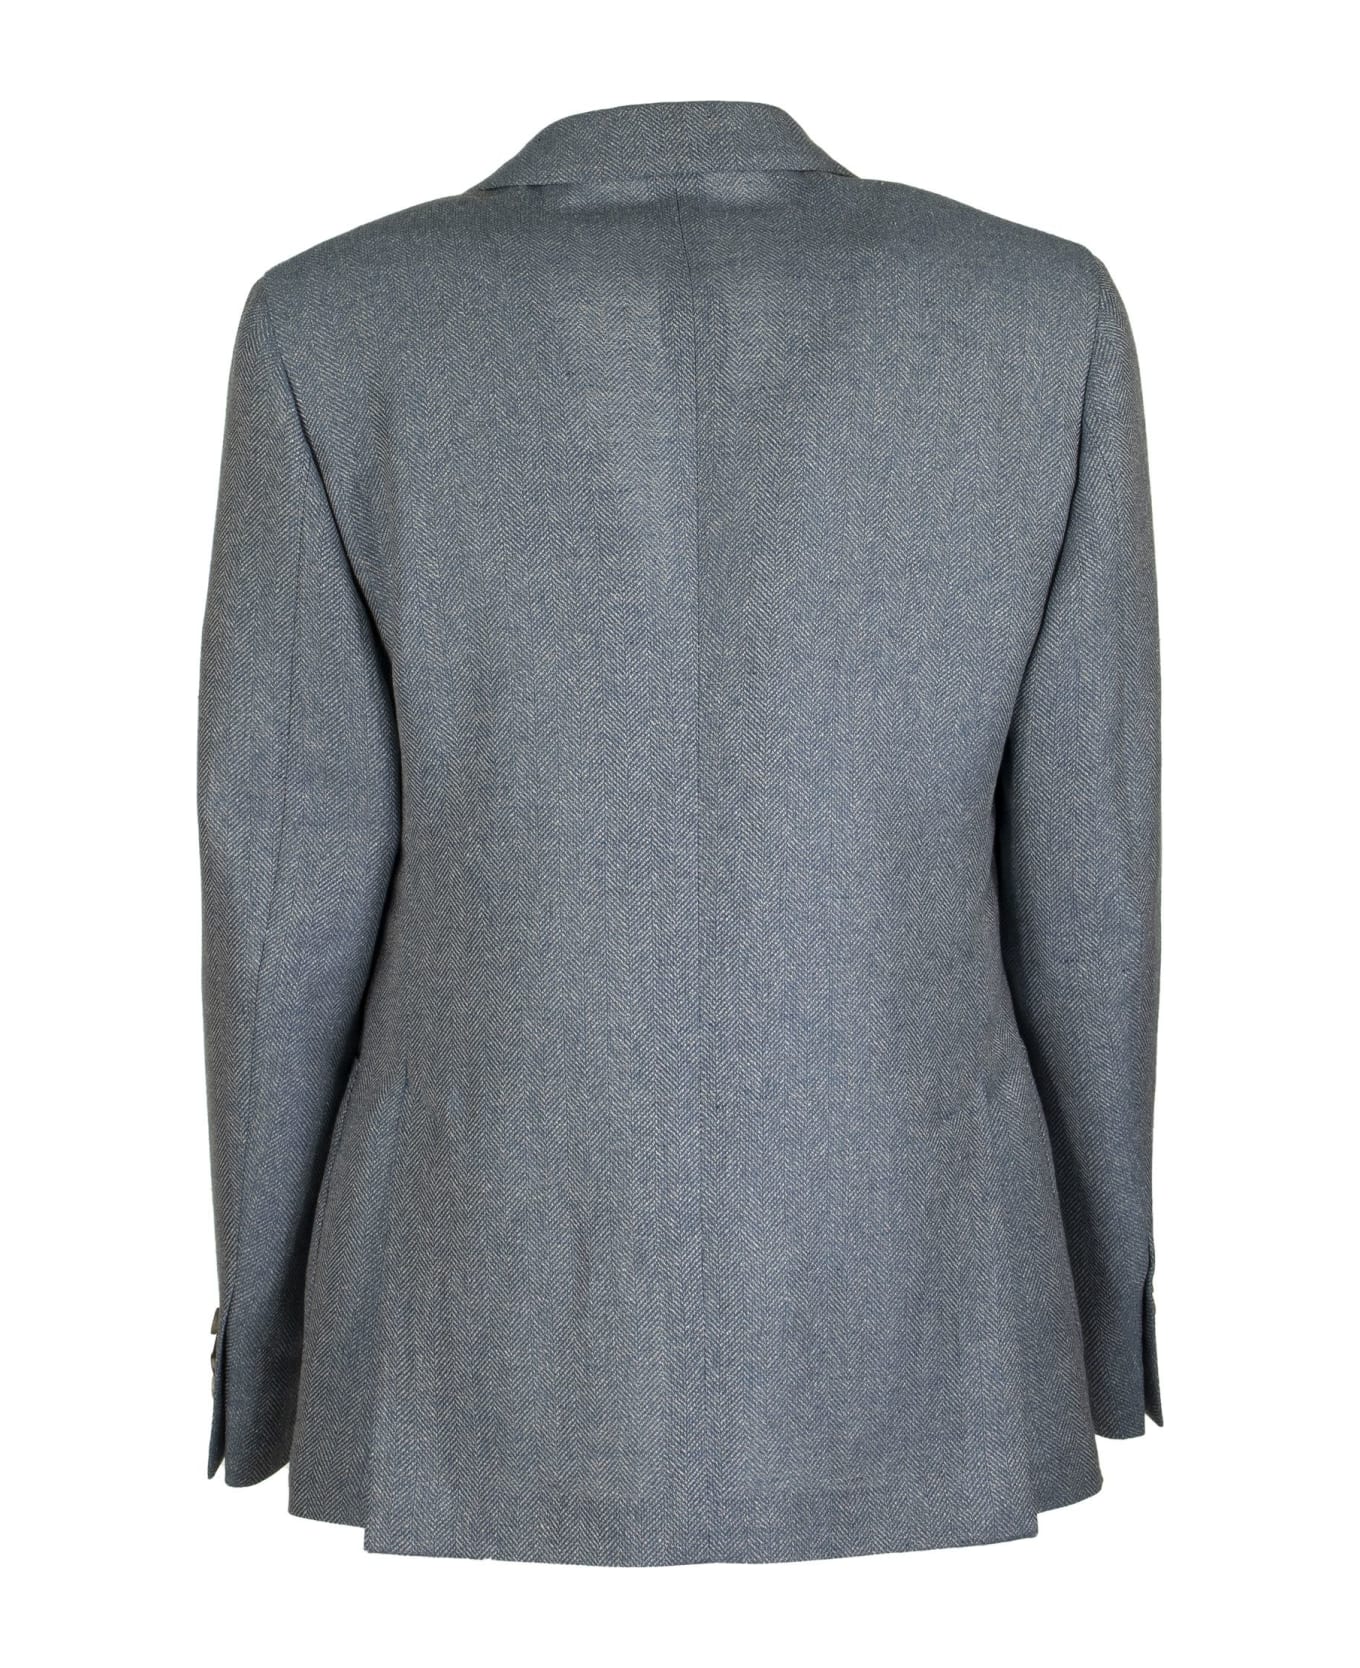 Lardini Single-breasted Two-button Jacket With Herringbone Pattern - Light Blue スーツ